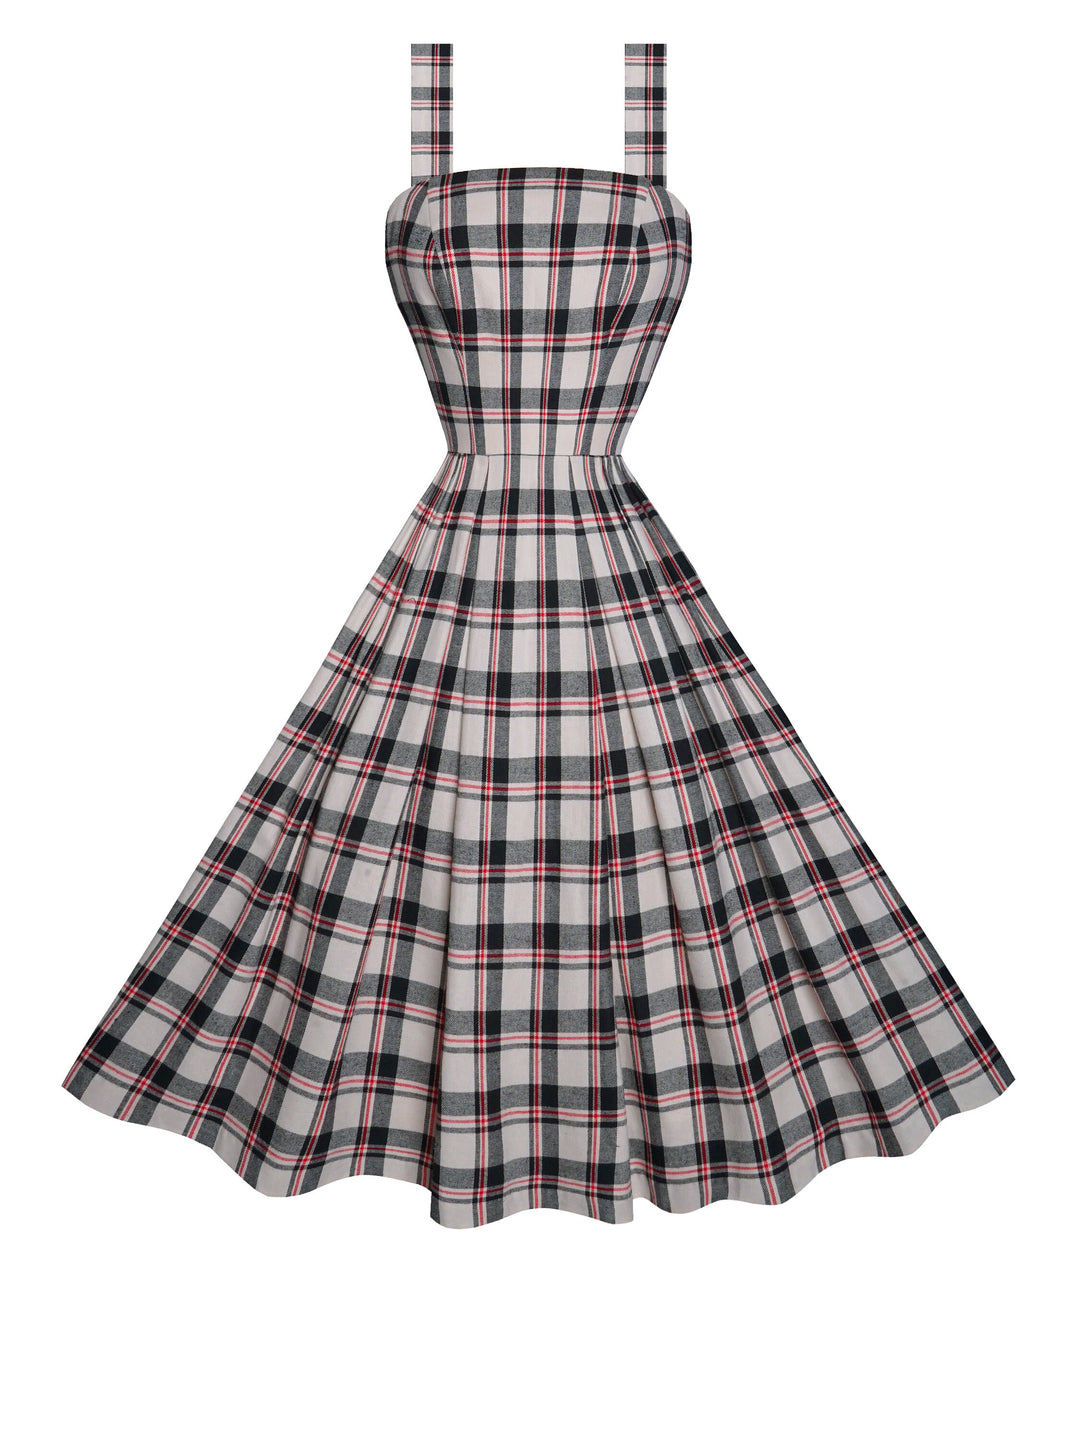 RTS - Size S - Lana Dress "Windsor Plaid"